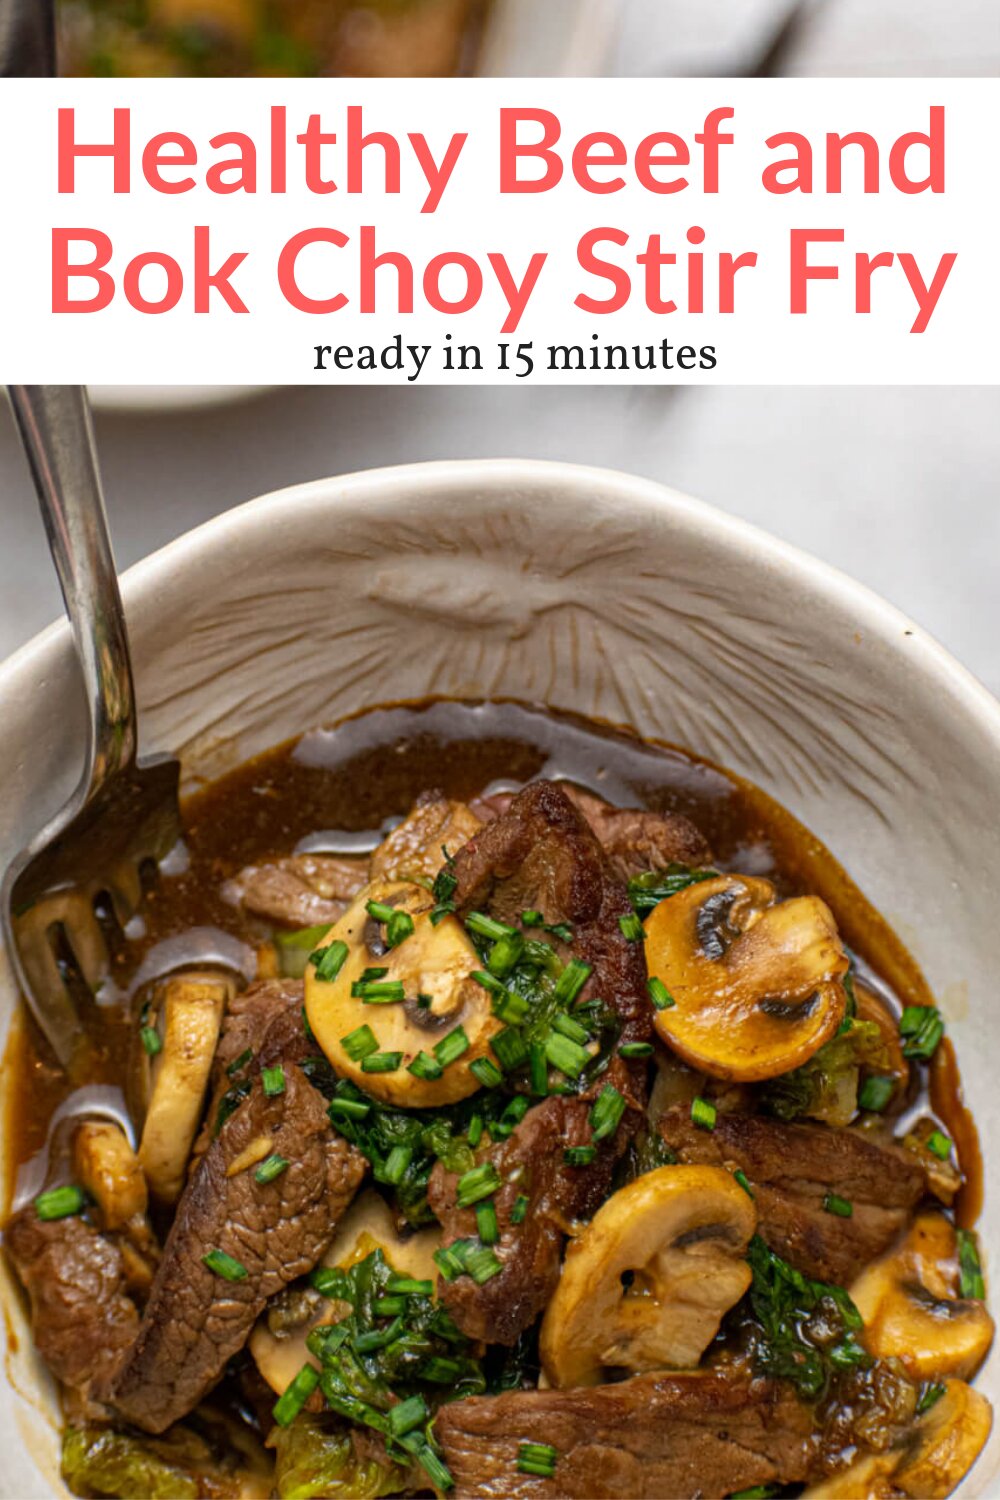 Beef and Bok Choy Stir Fry - Slender Kitchen